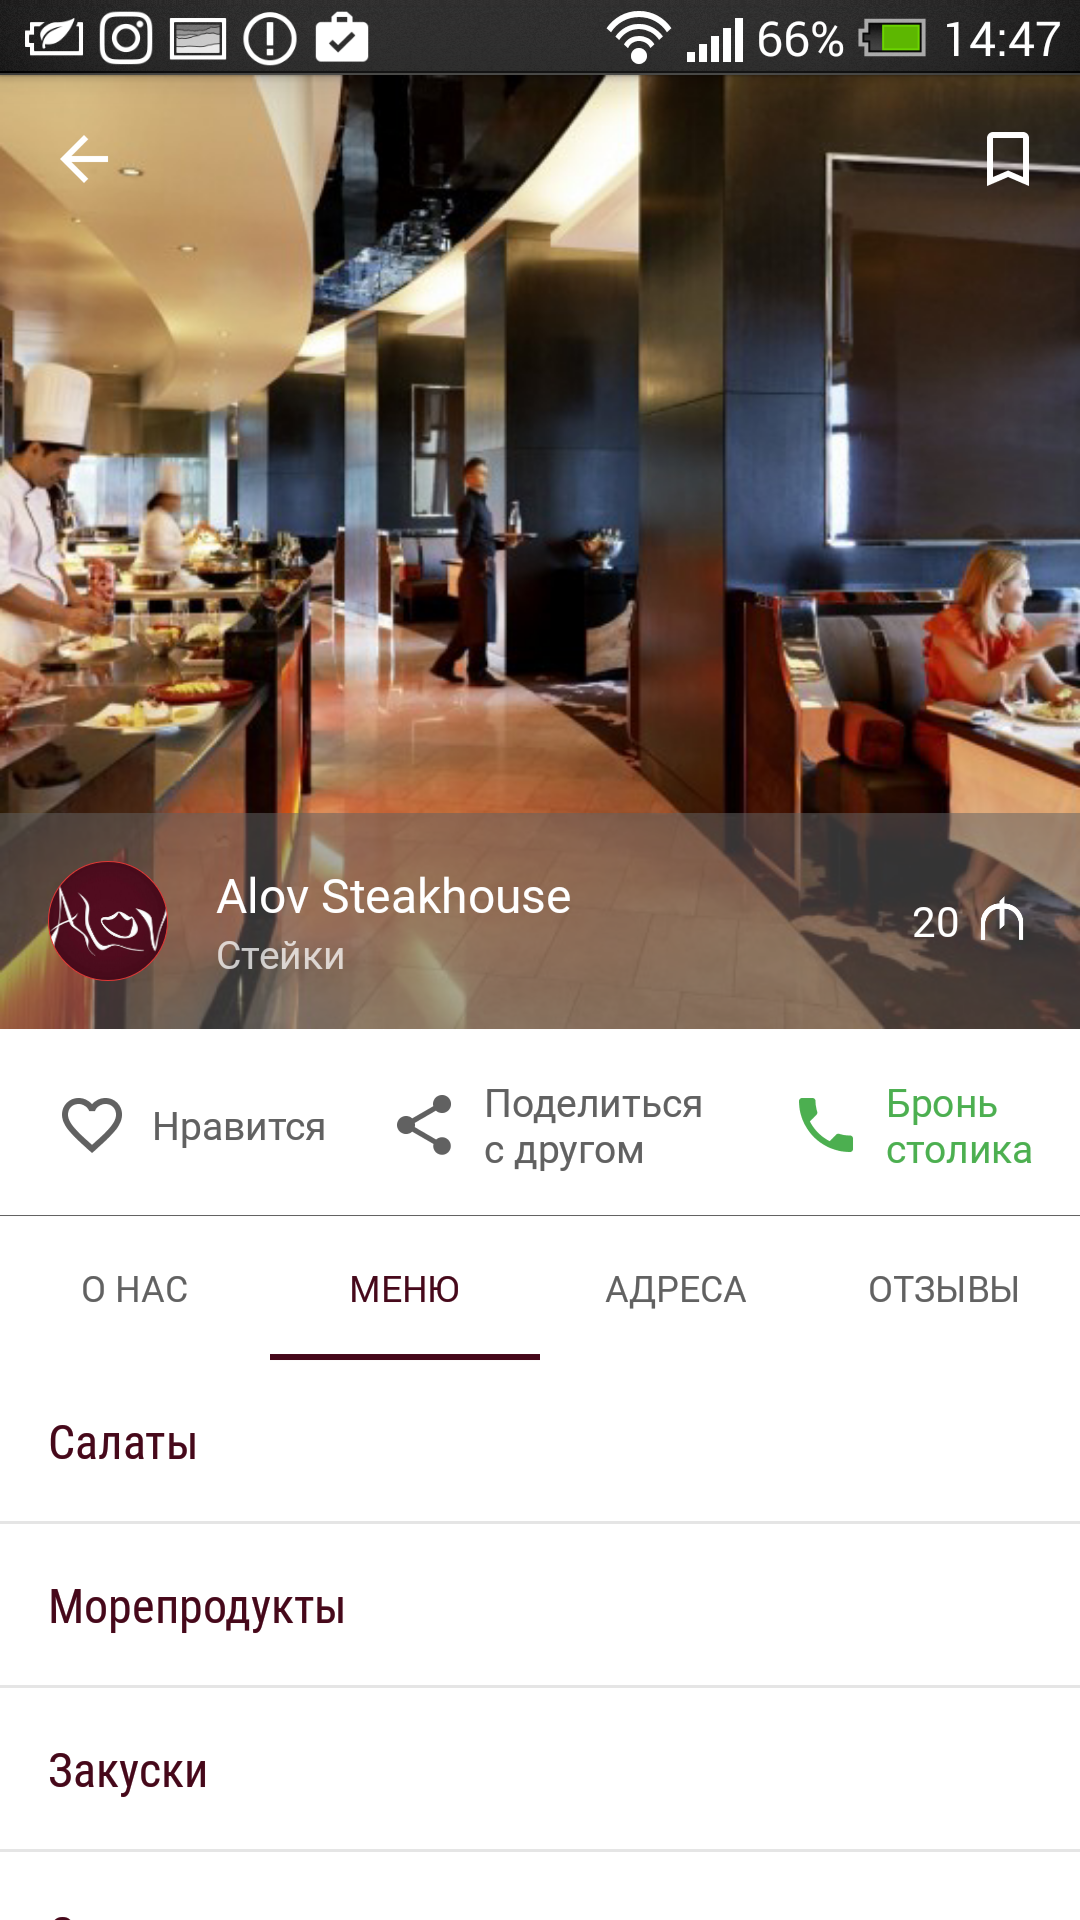 Alov Steak House